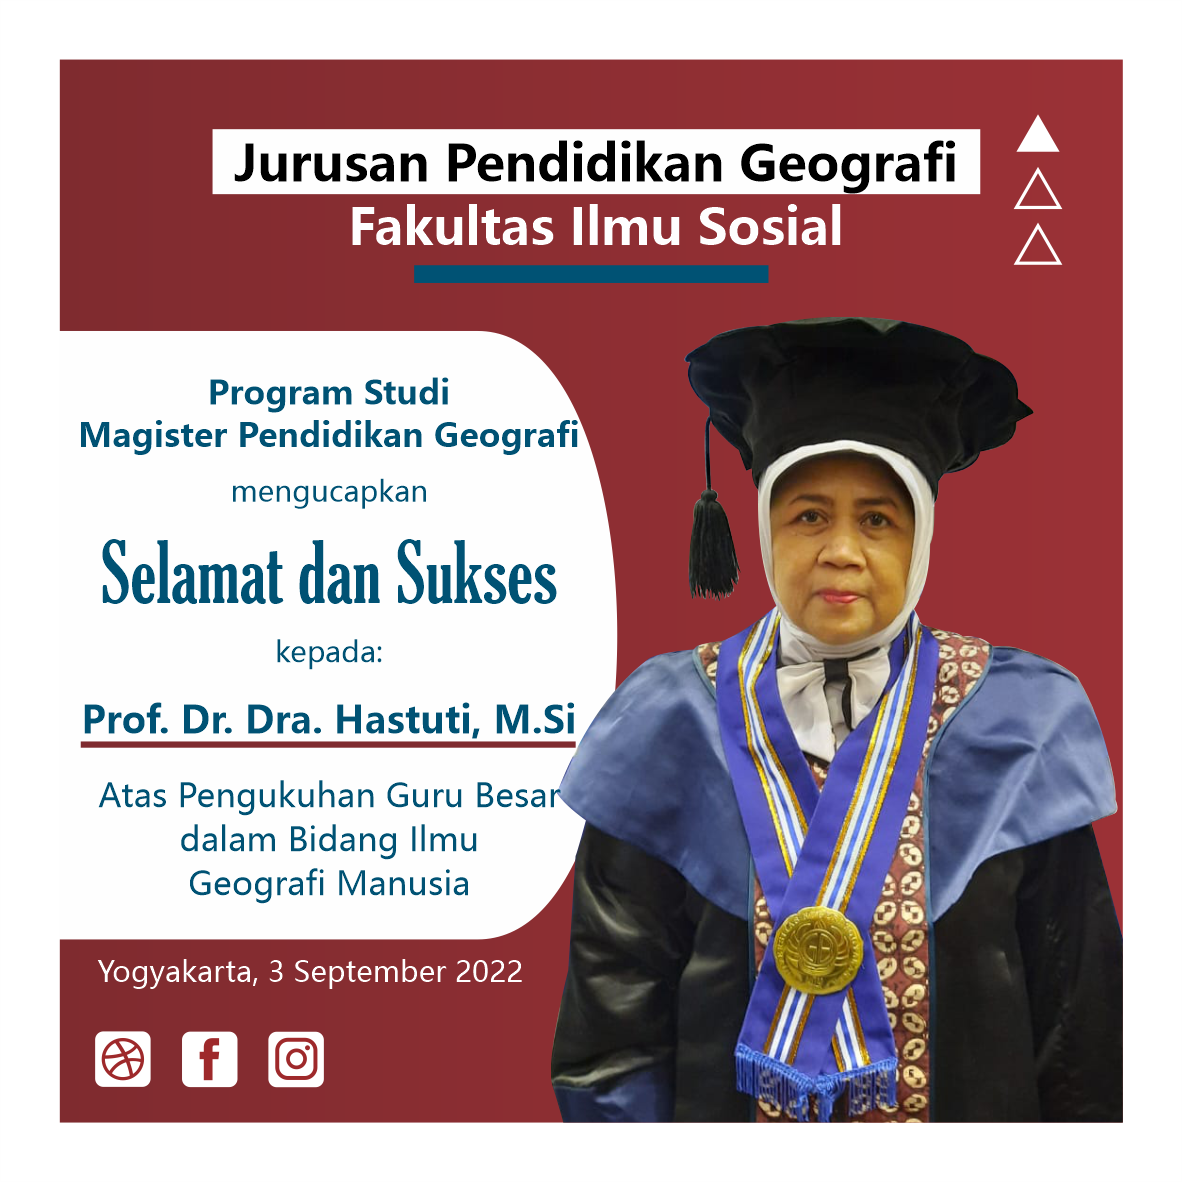 Prof. Dr. Dra. Hastuti, M.Si